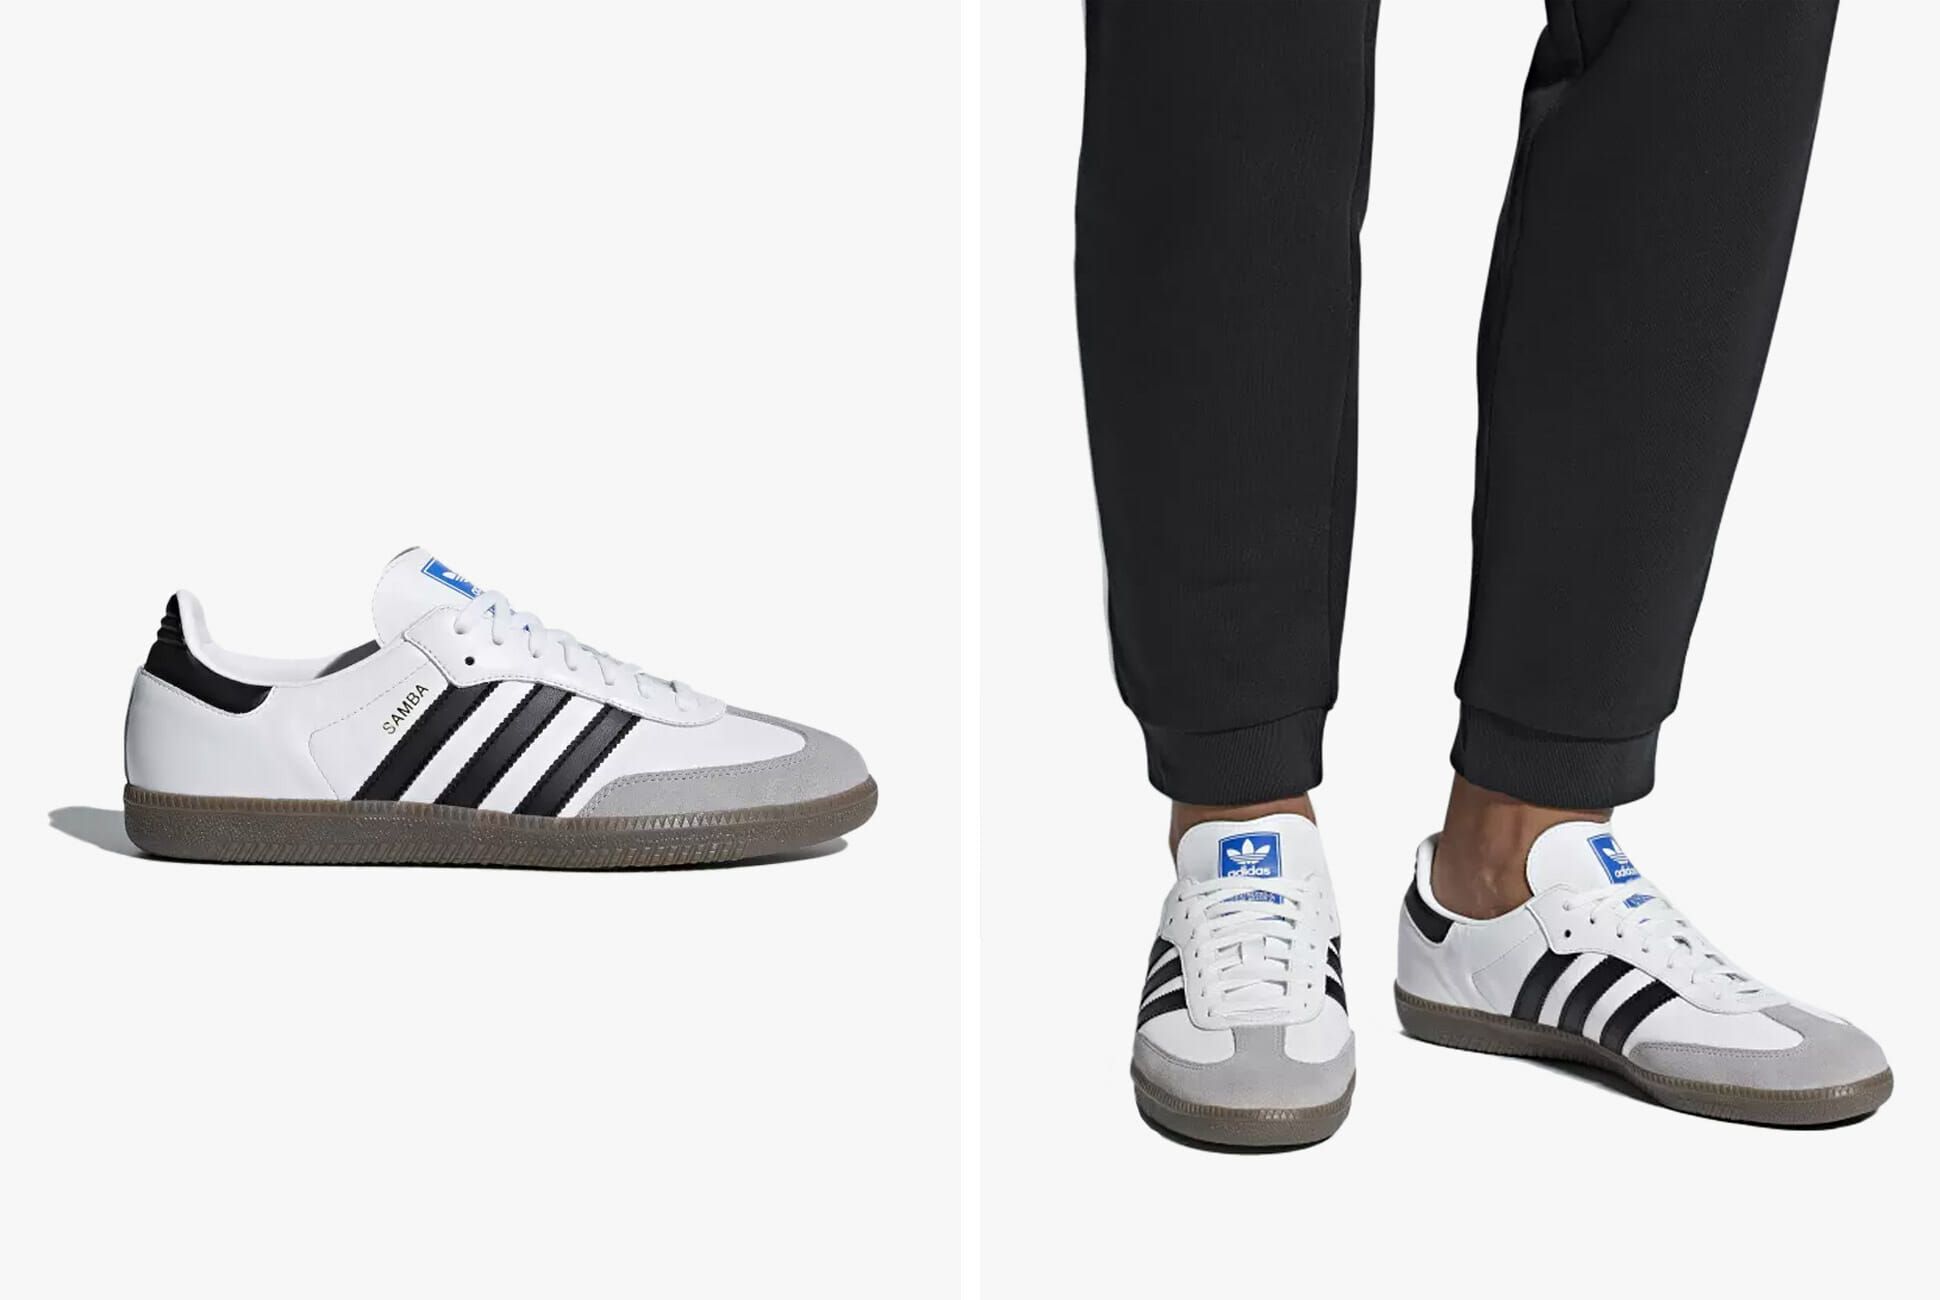 Adidas Is Bringing Back The Original Samba Design